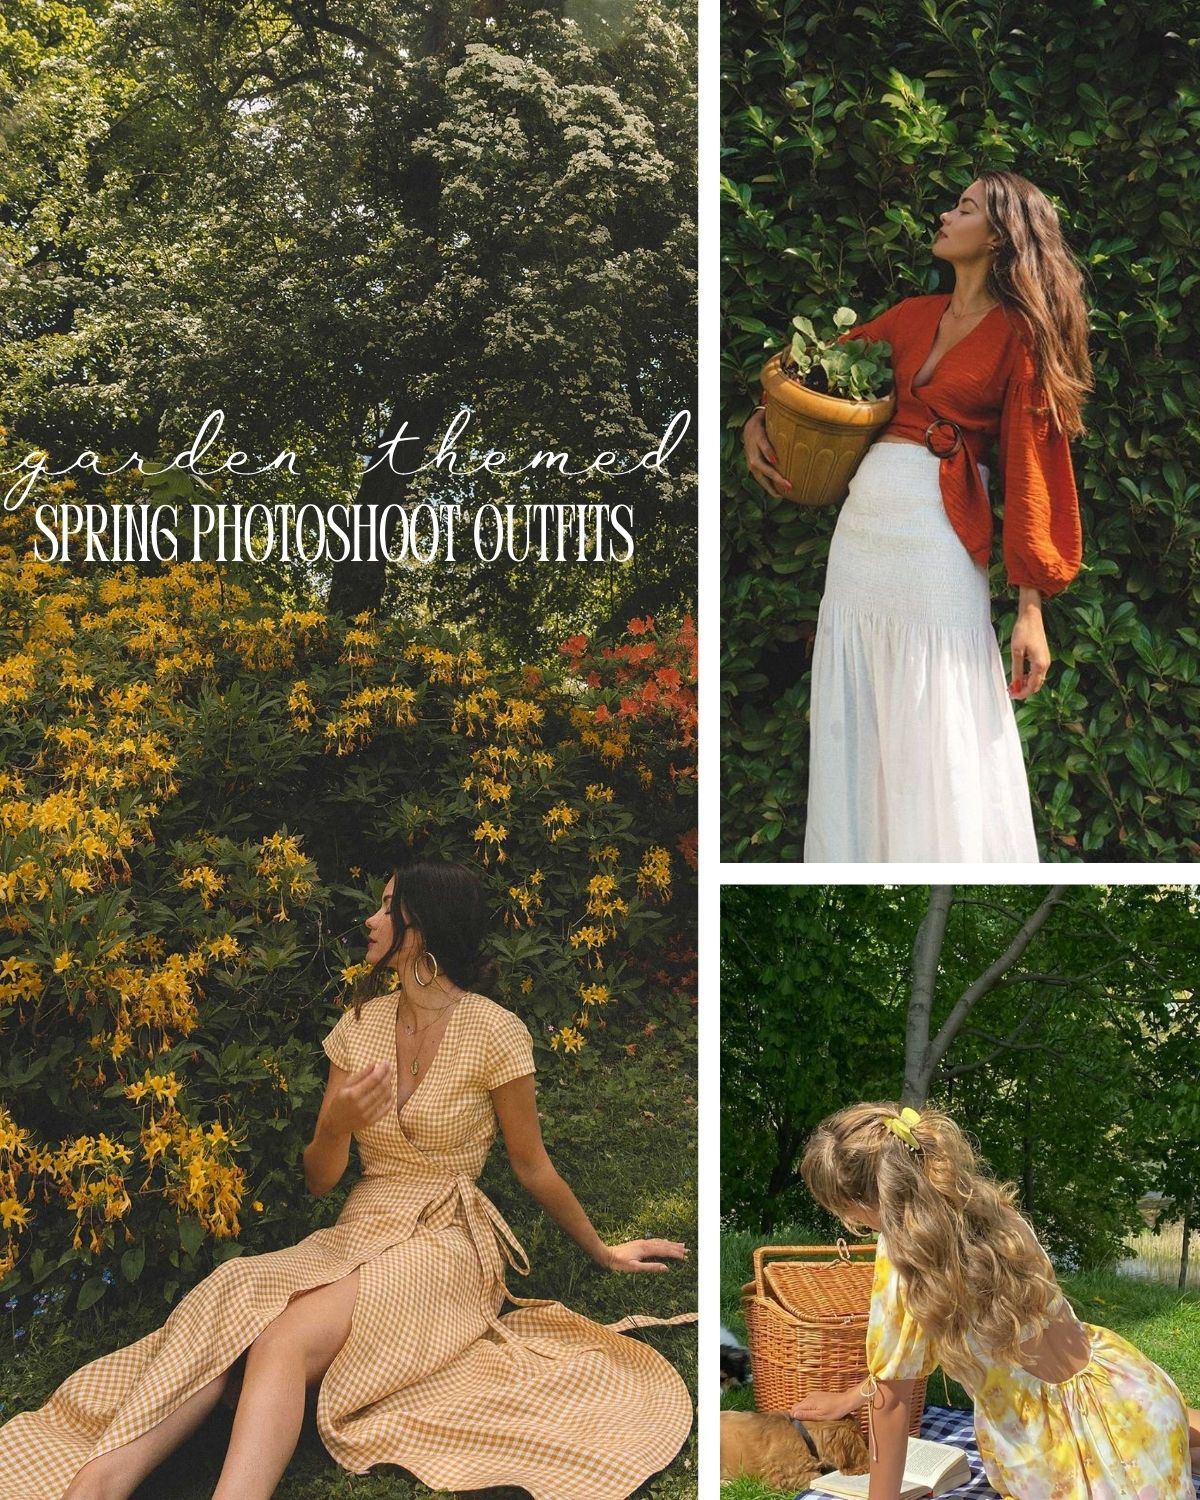 Three girls in a garden setting in pretty spring dresses